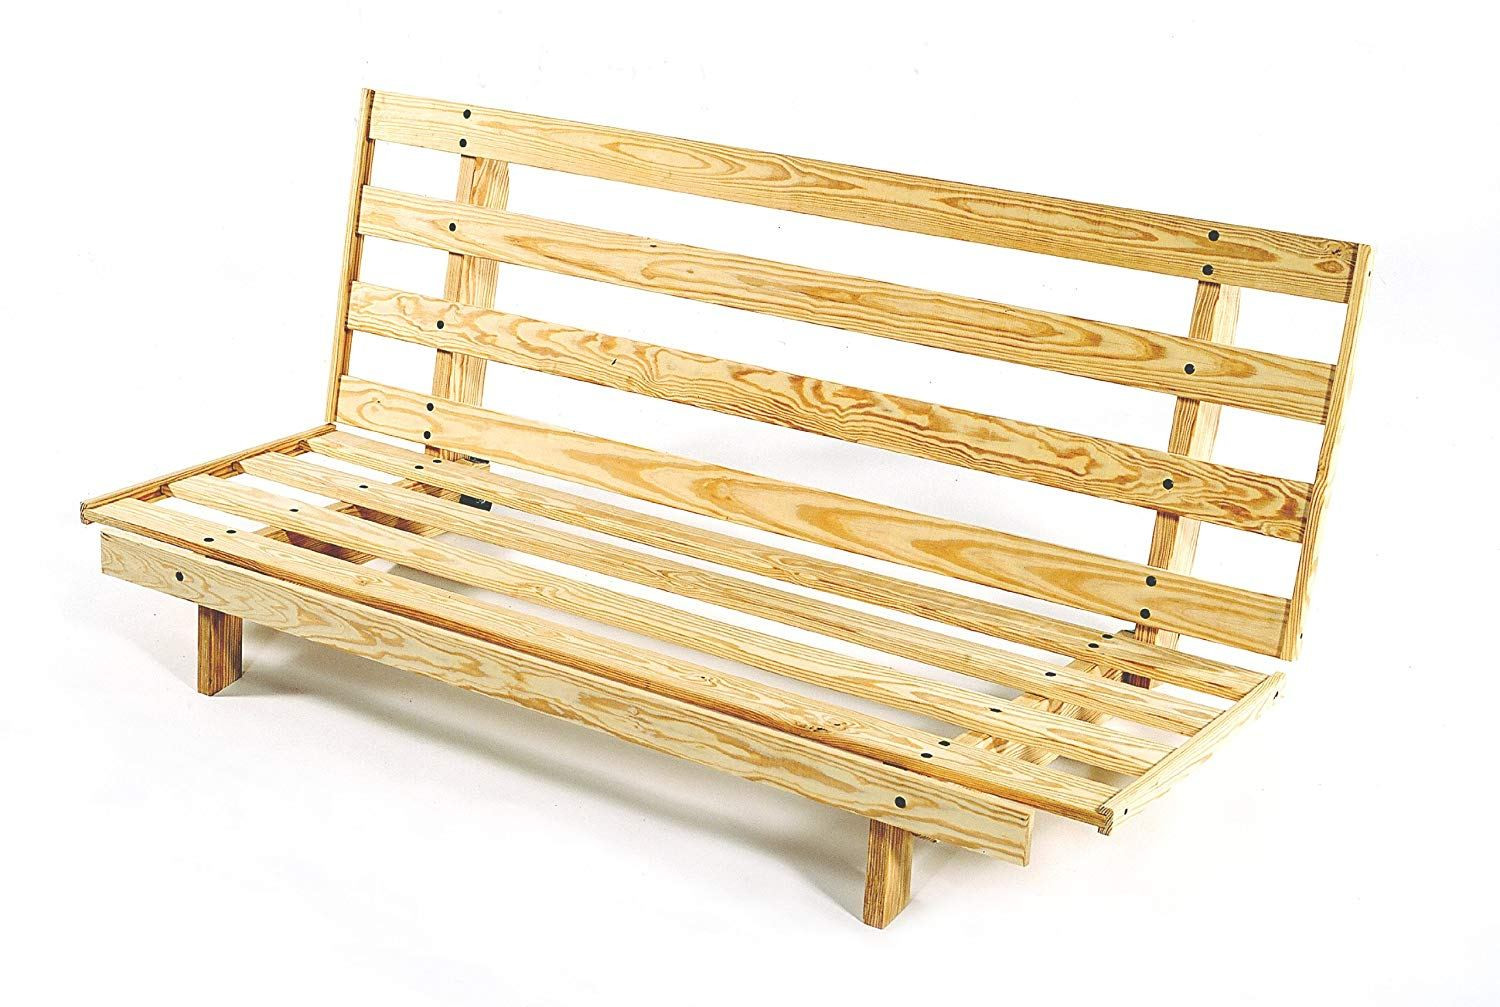 Best ideas about DIY Futon Frame Plans
. Save or Pin Build DIY Simple wood futon plans Plans Wooden wine rack Now.